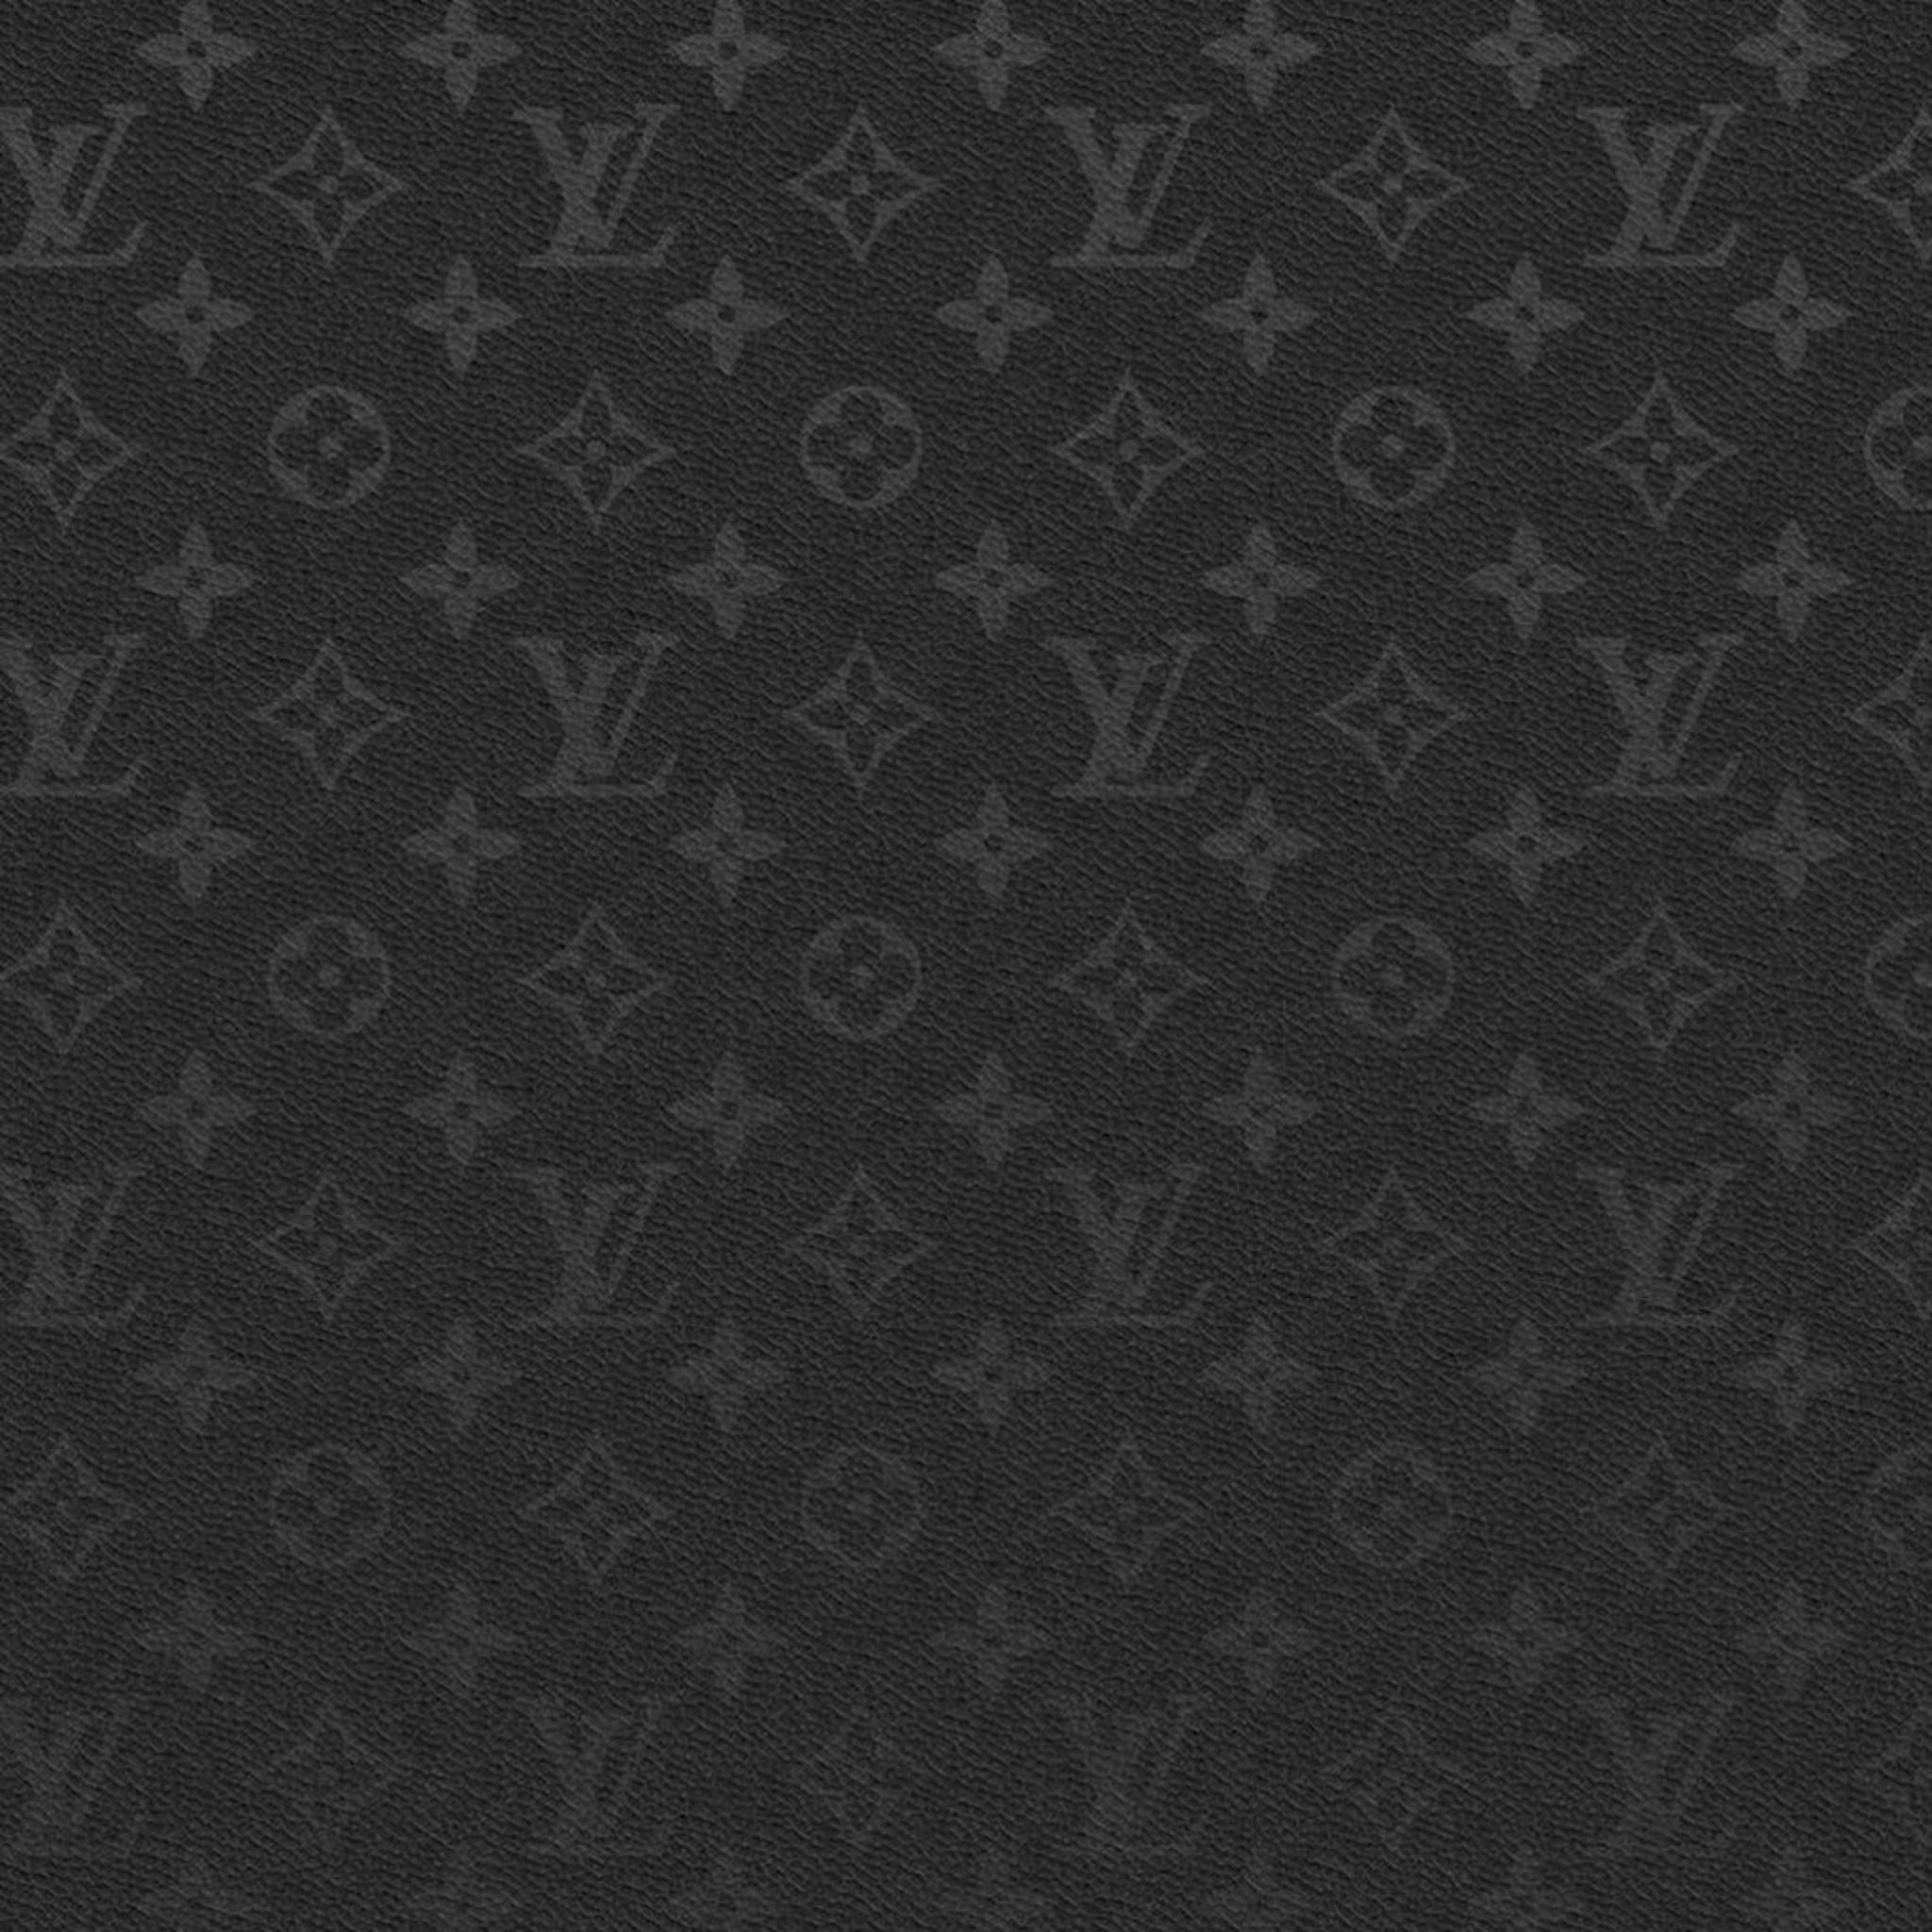 Louis Vuitton Logo Black screen  Background Music  27 Min 4K  YouTube